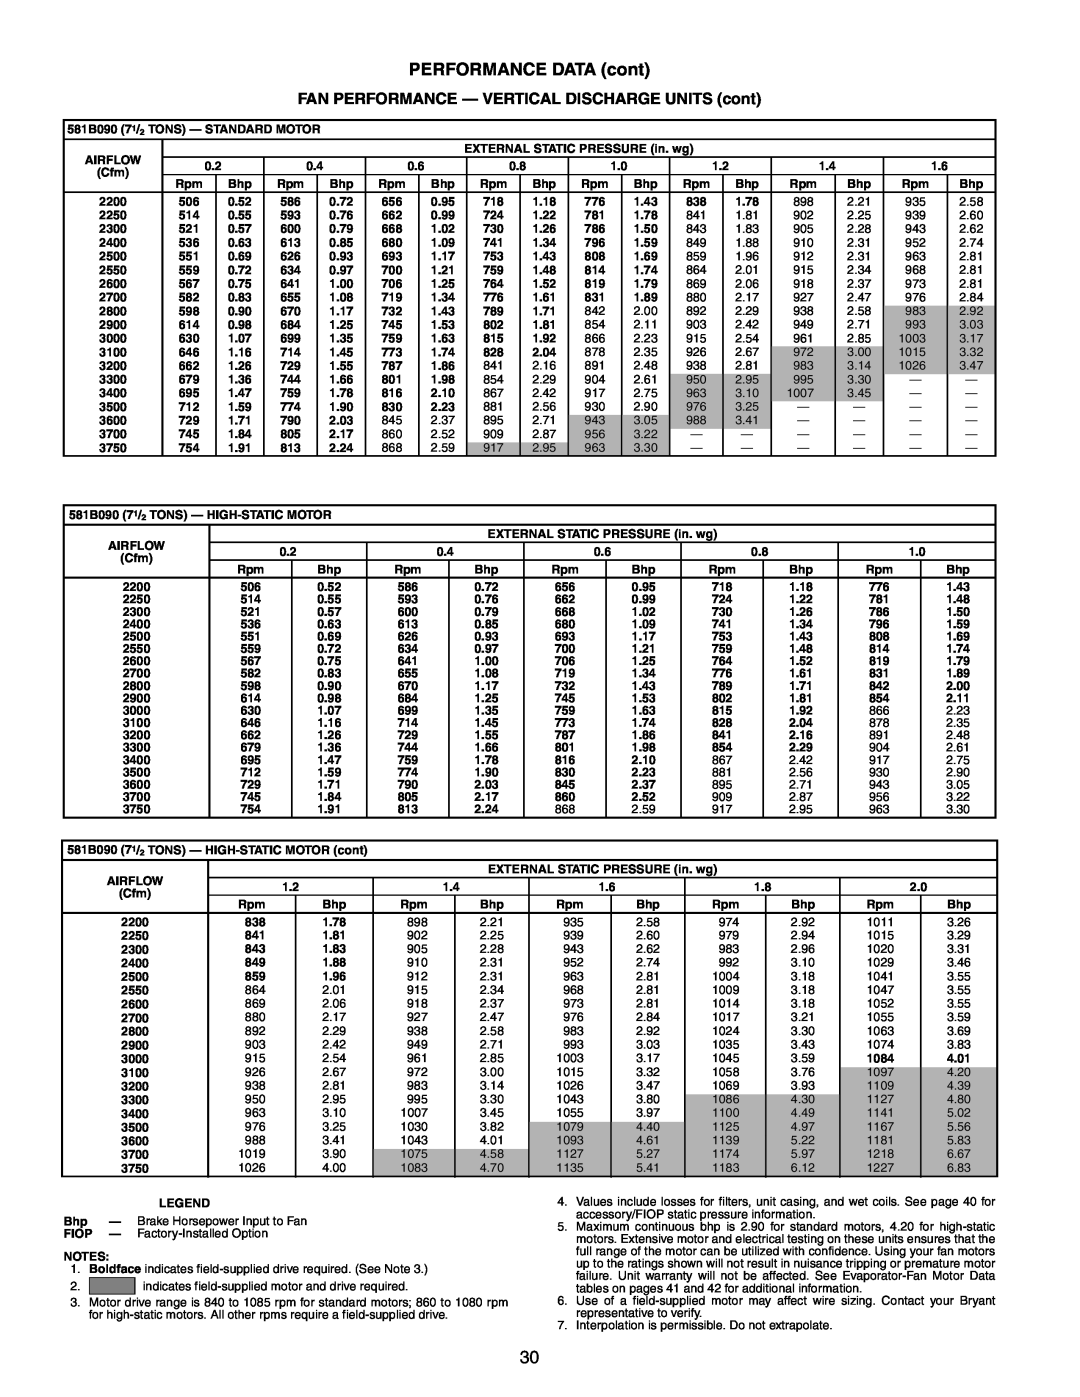 Bryant manual PERFORMANCE DATA cont, 581B090 71/2 TONS — STANDARD MOTOR 